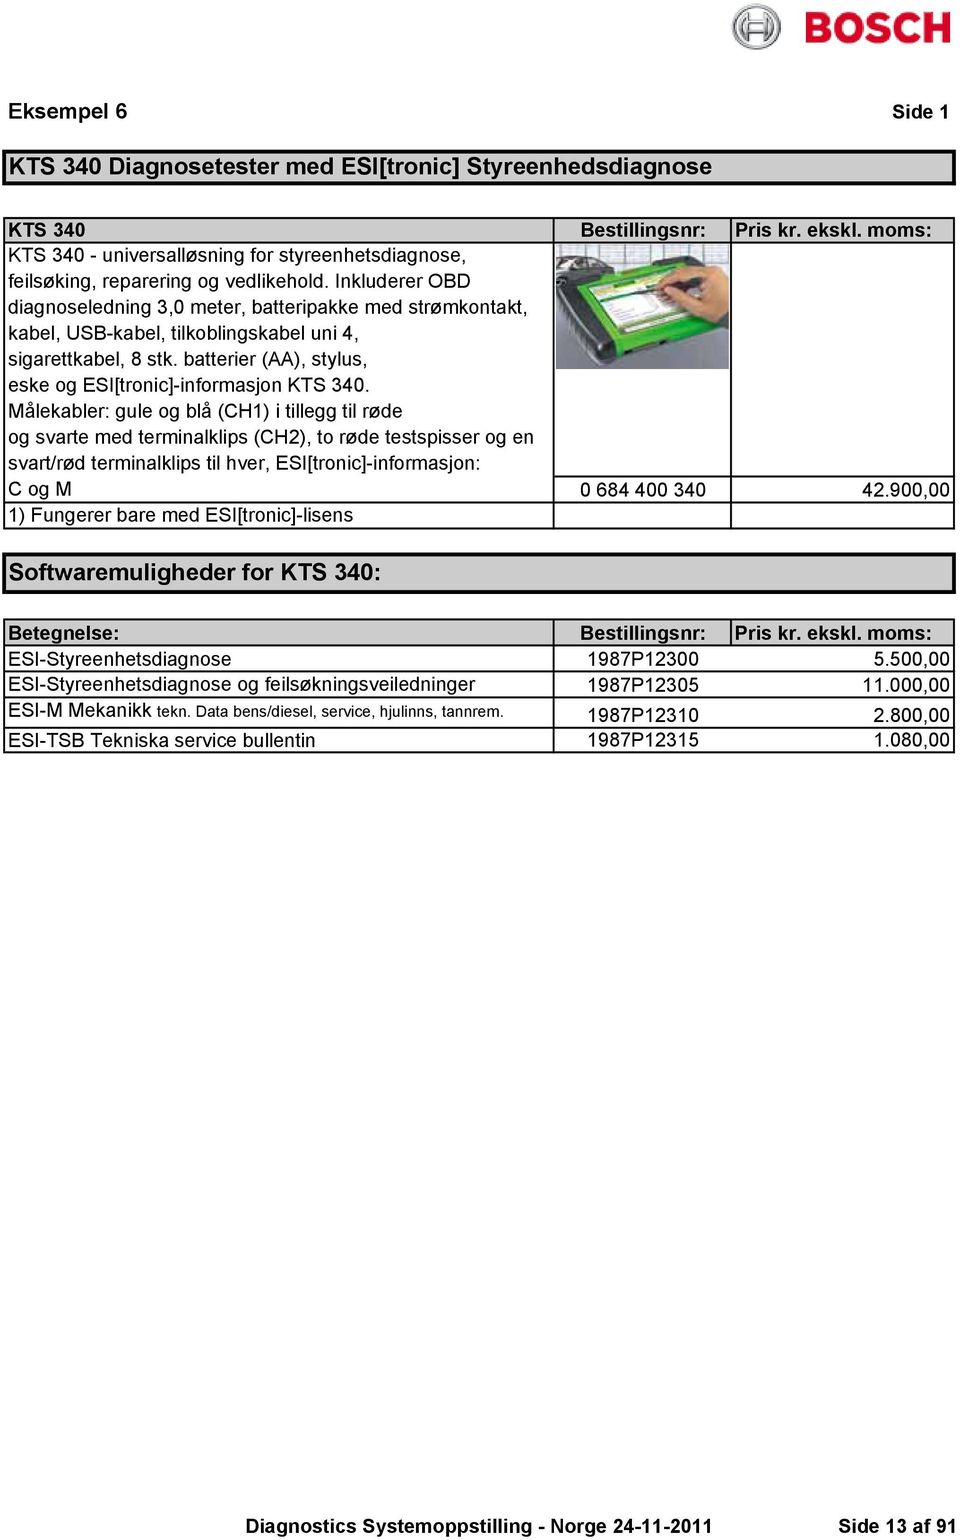 Bosch Diagnostics Systemoppstilling /11 Norge. Produkt index - PDF Gratis  download